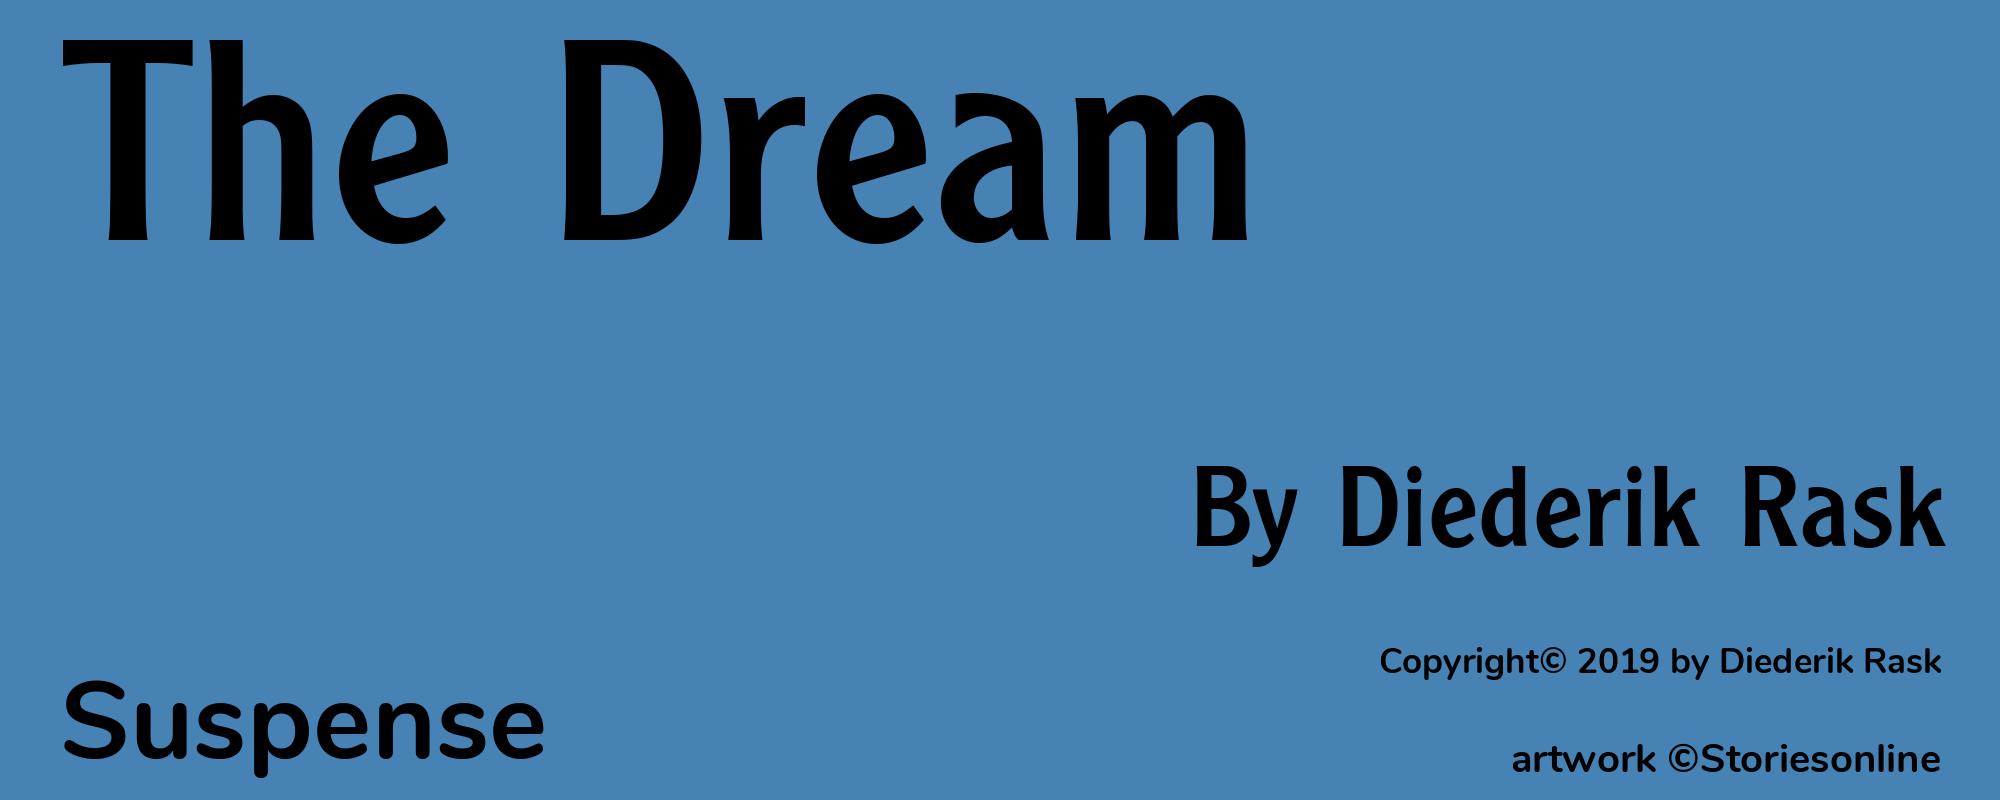 The Dream - Cover